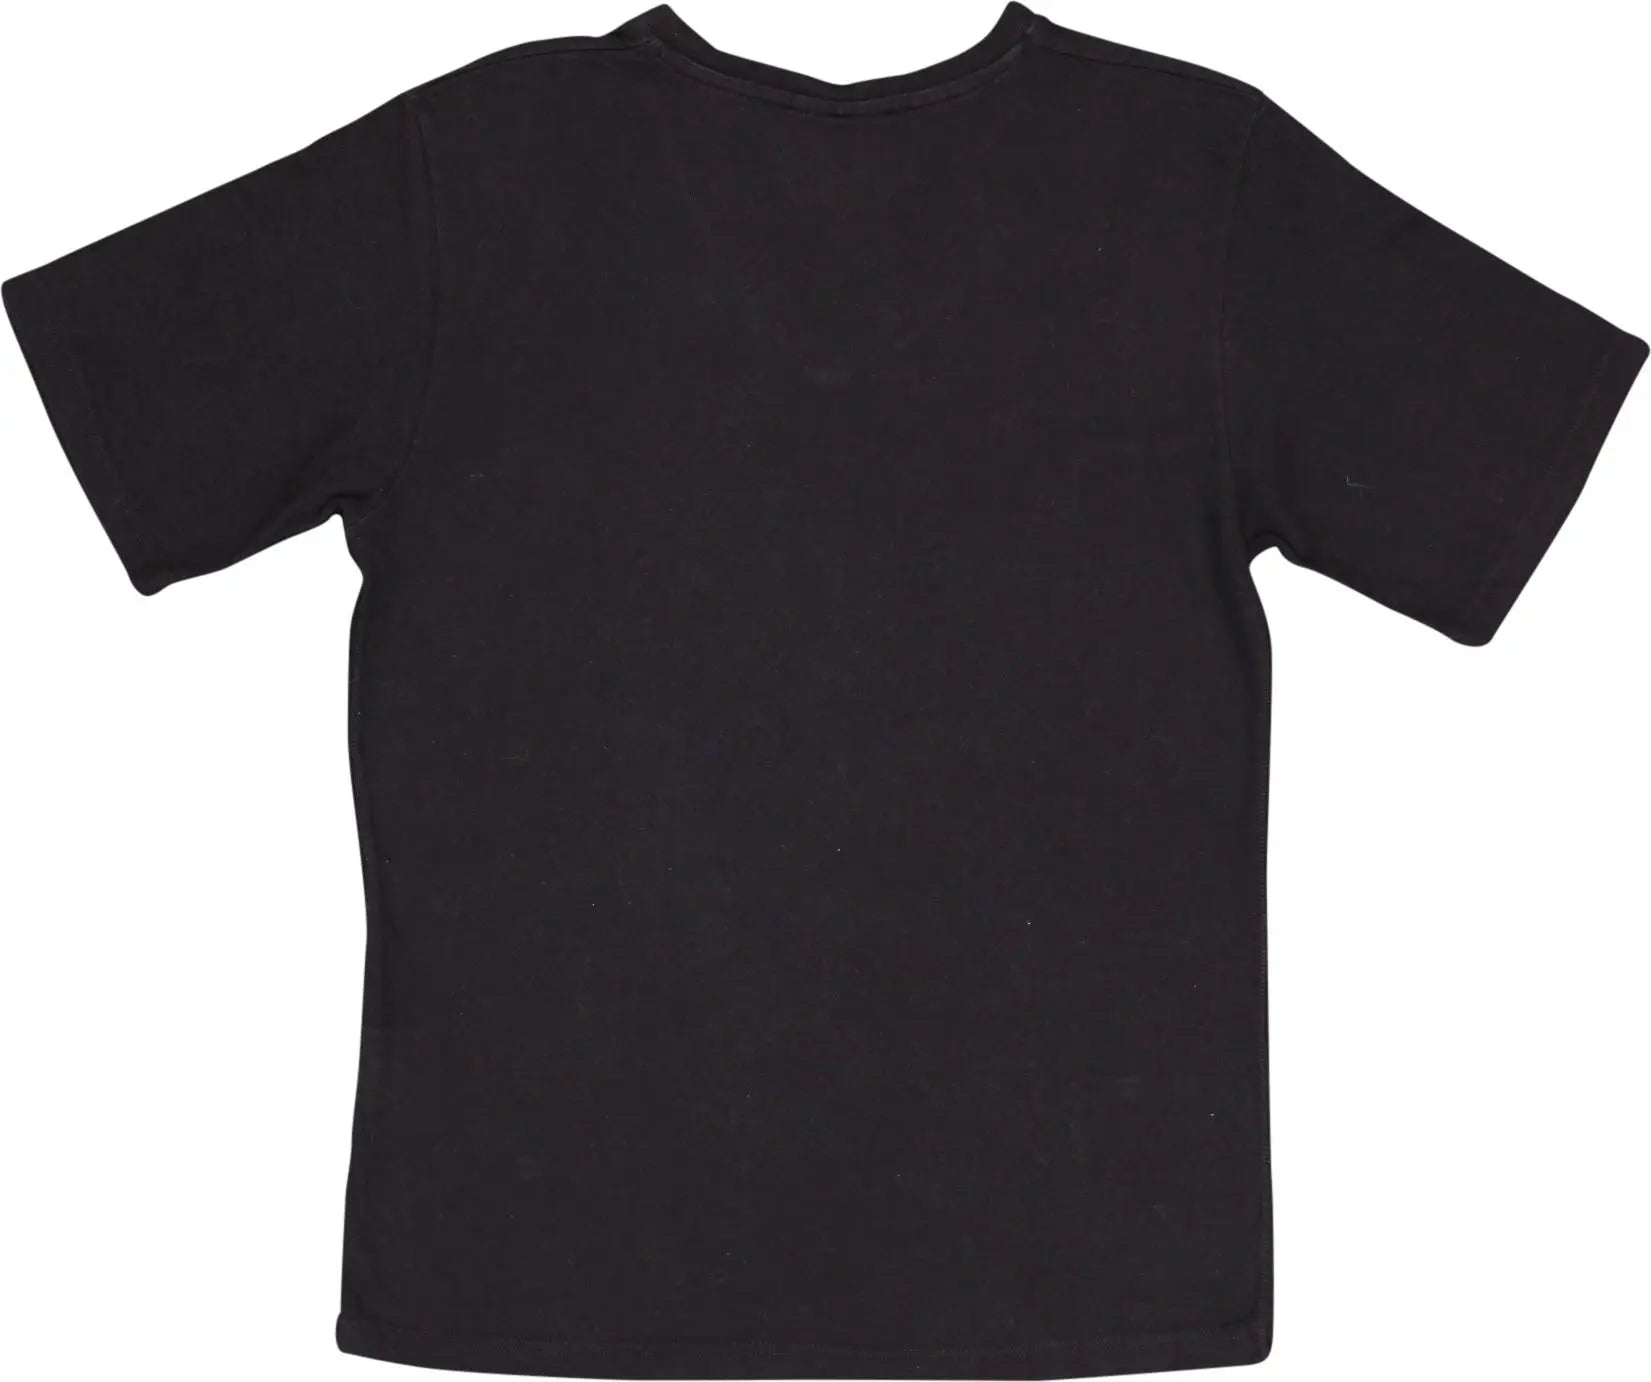 Wrangler - Black V-Neck T-shirt by Wrangler- ThriftTale.com - Vintage and second handclothing